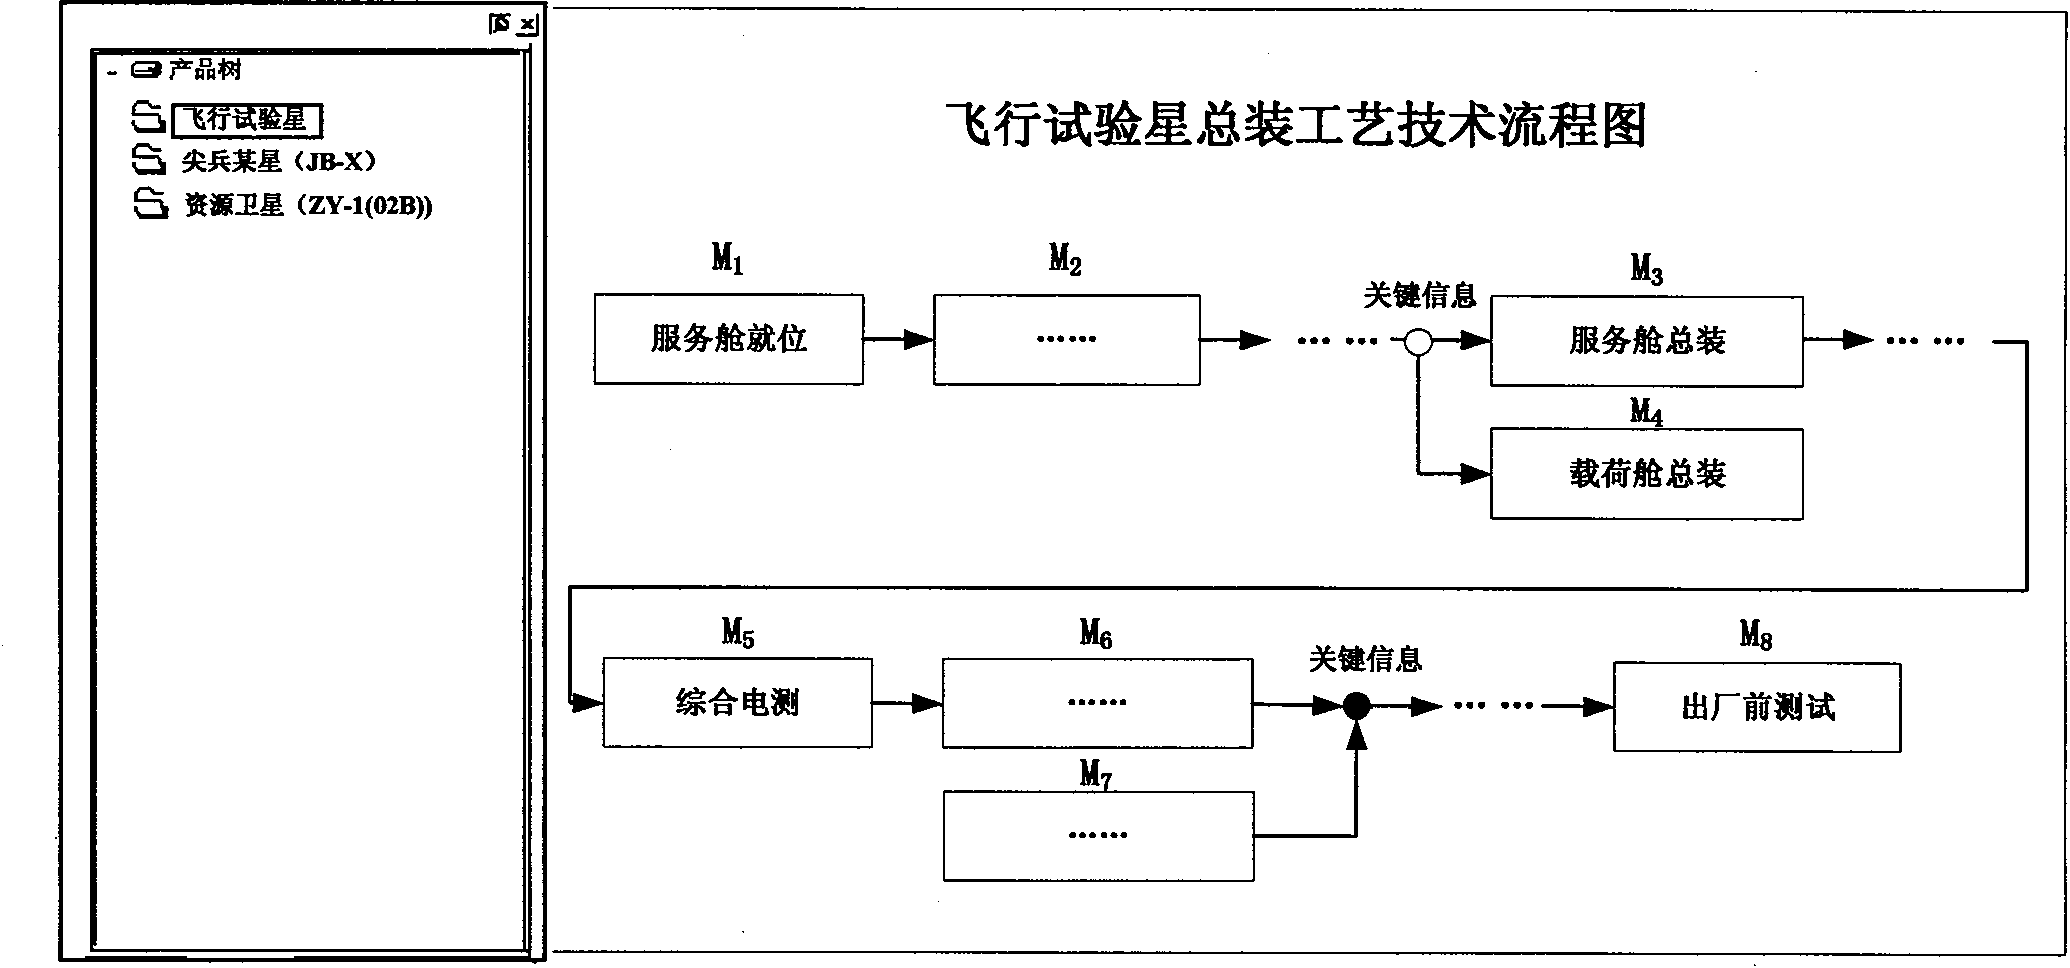 Design method of production flow